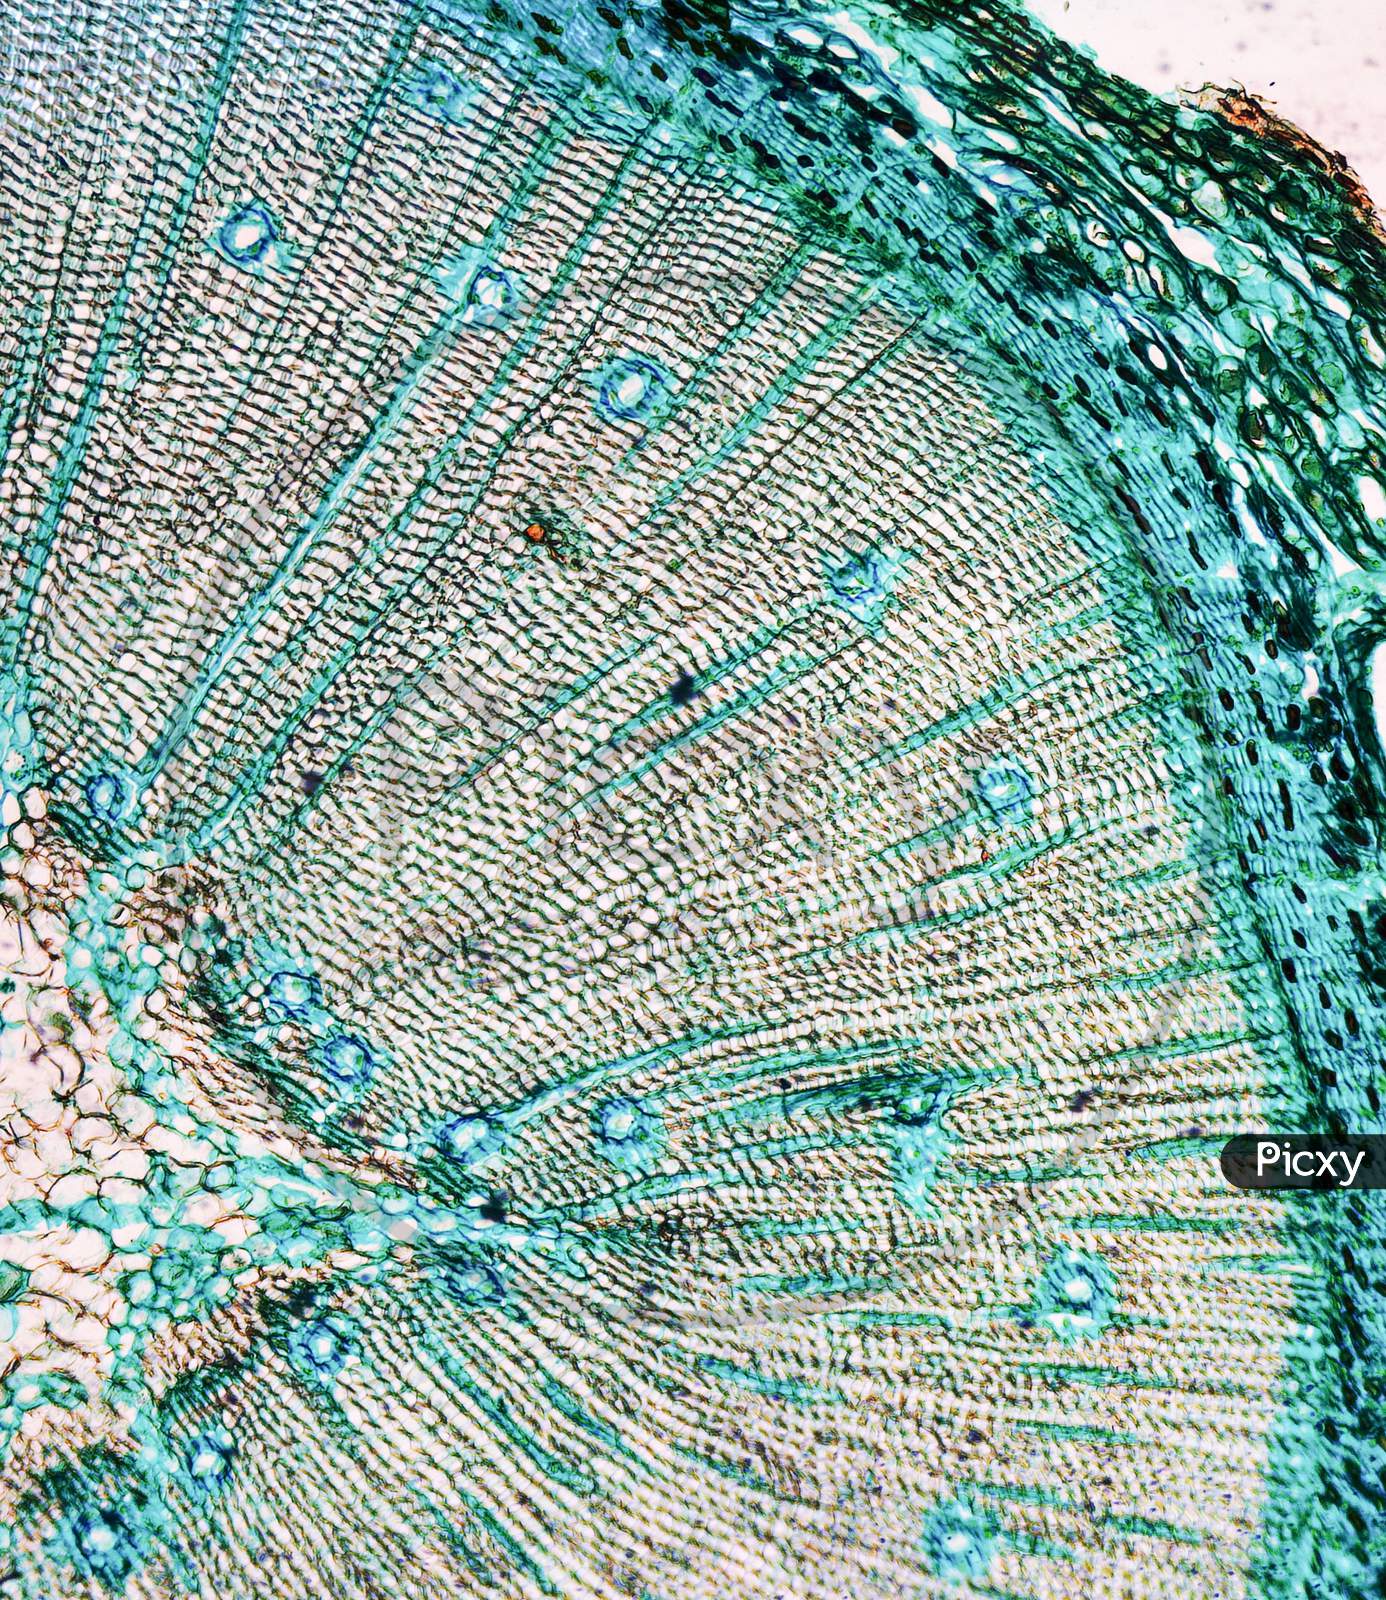 Pine Wood Micrograph